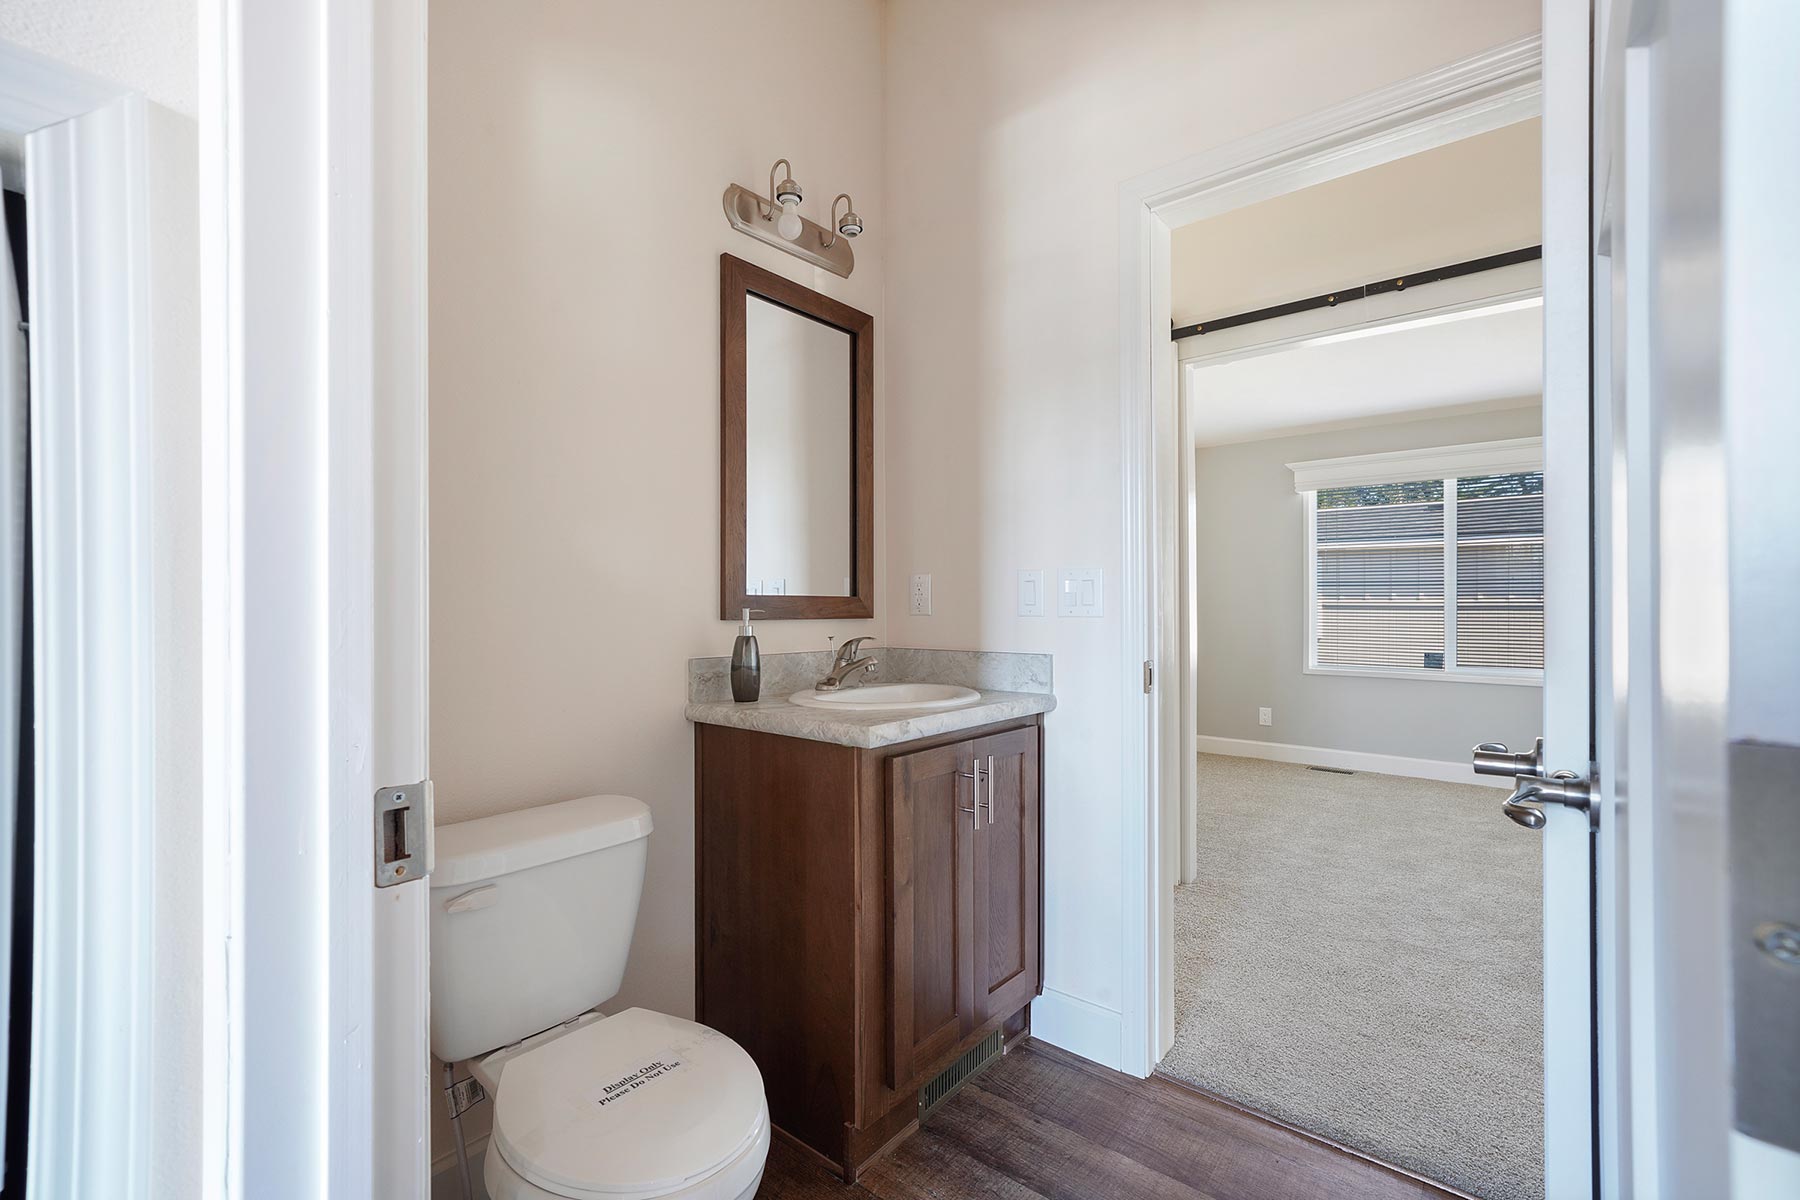 Skyline Homes Westridge 1227CT Manufactured Home Second bathroom featuring single vanity, shower, toilet